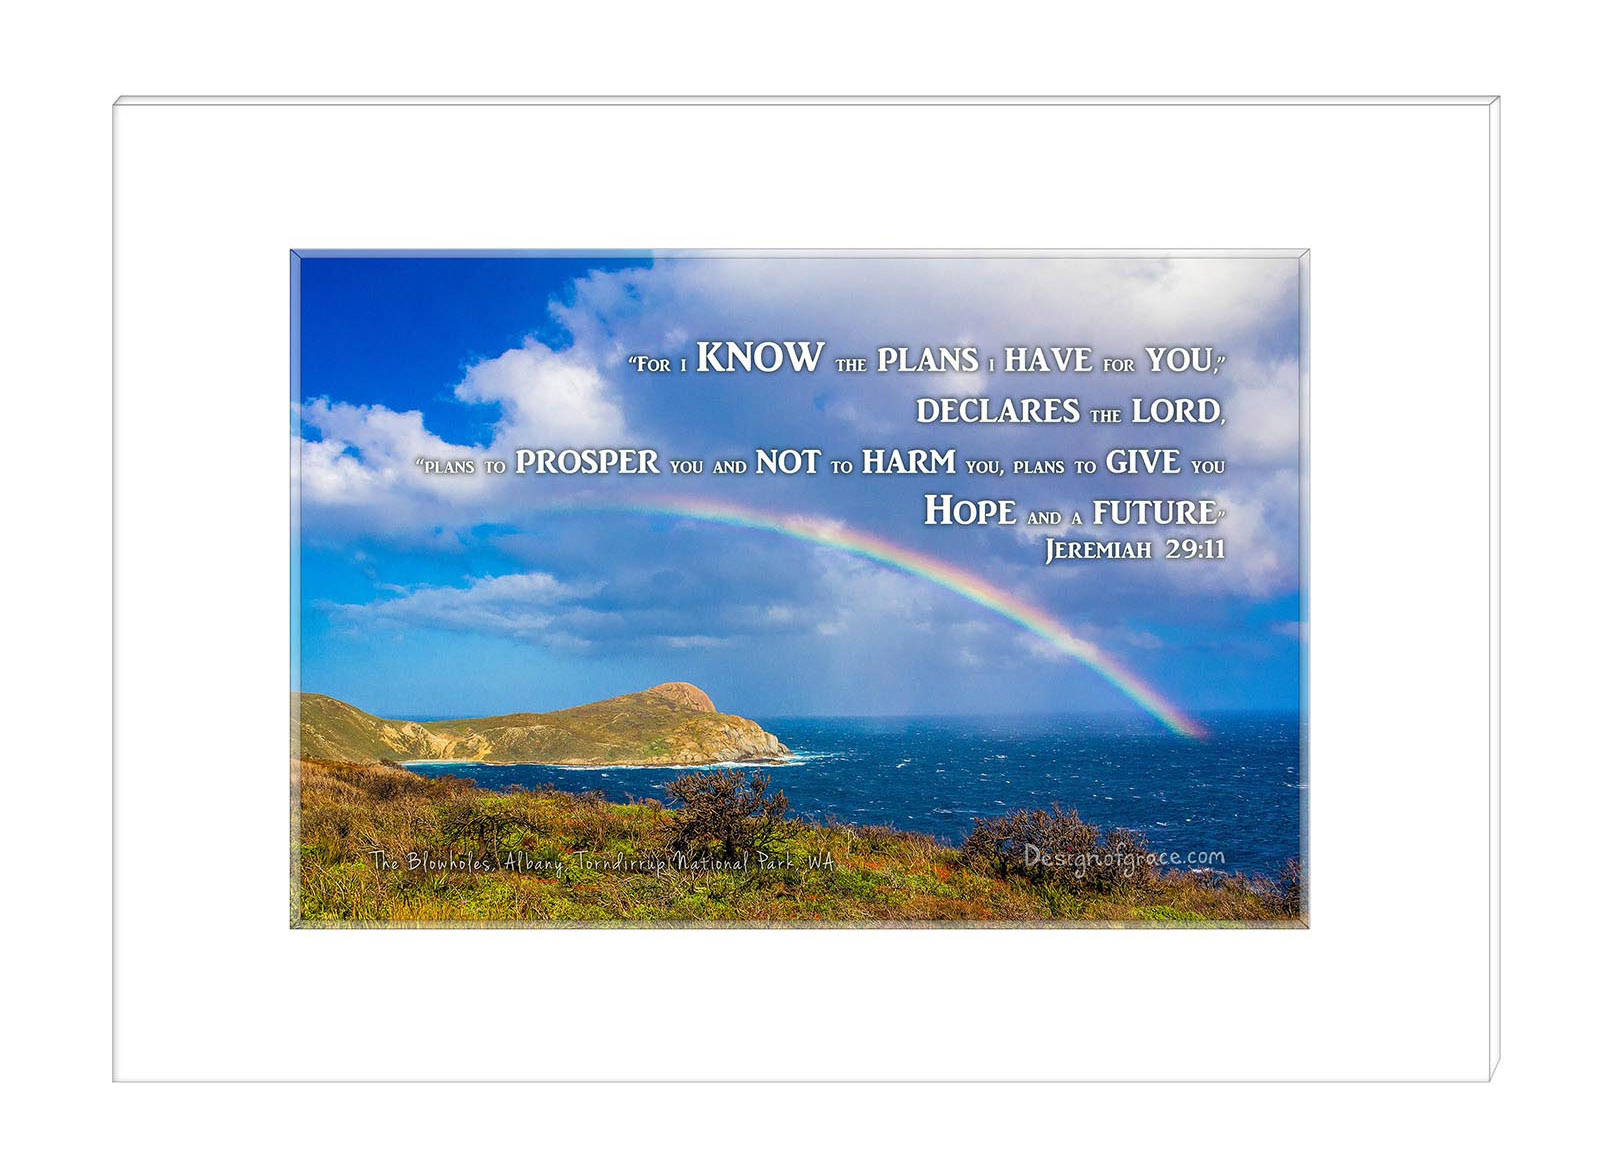 The Blowholes Rainbow, Albany, Torndirrup National Park, WA